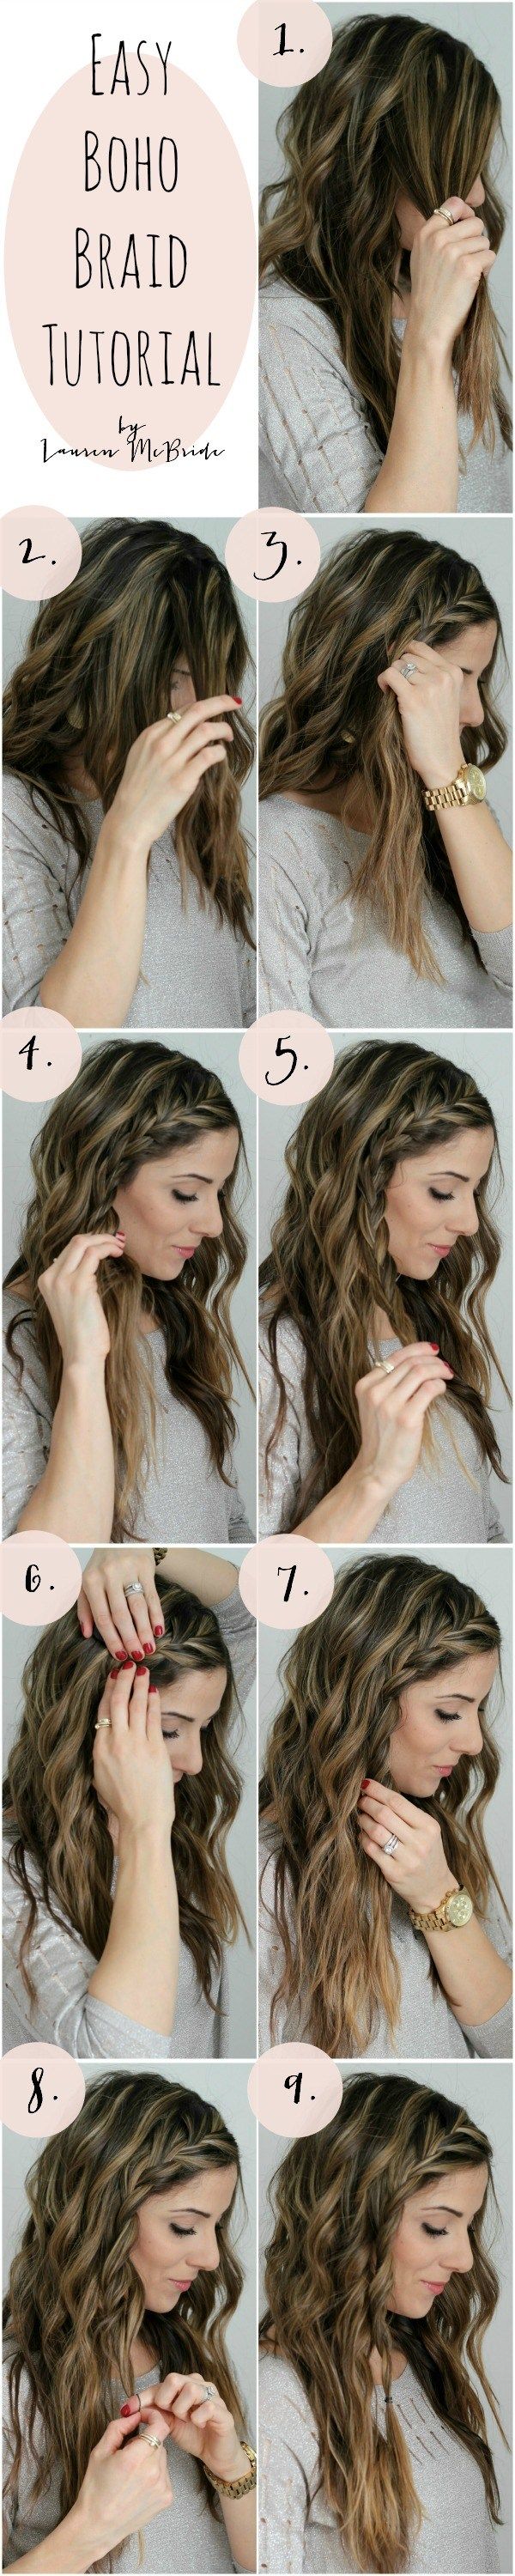 Easy Boho Braid Tutorial. Step by step how to braid your own hair. DIY wavy long...